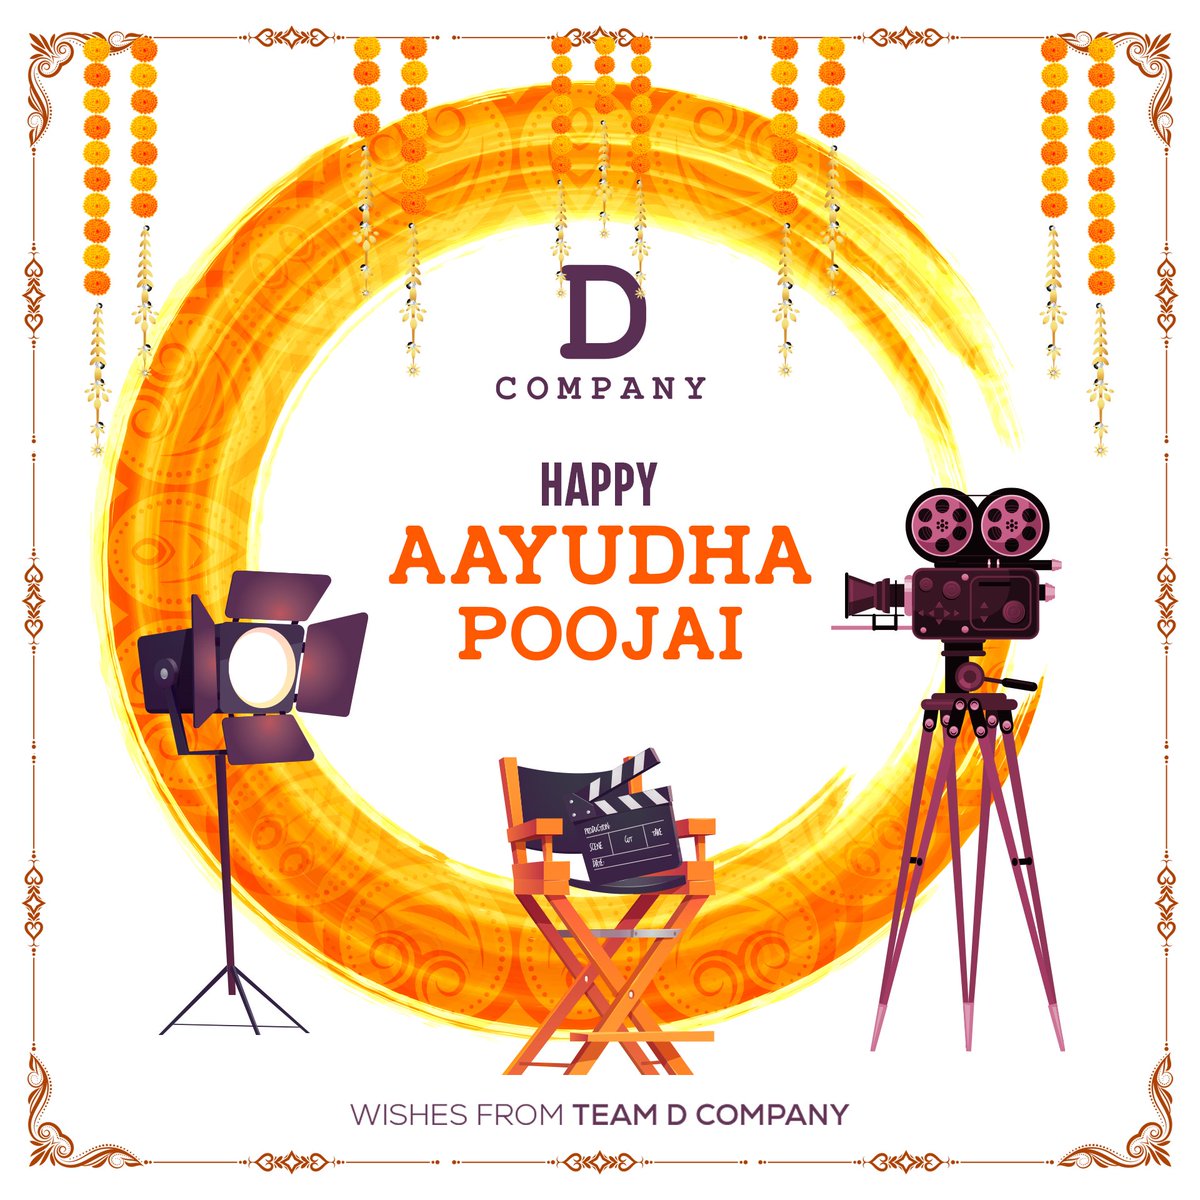 Happy Ayudha Poojai!! May everything you do prosper!! Wishes from team @DCompanyOffl @DuraiKv #Ayudhapooja #AyudhaPoojai